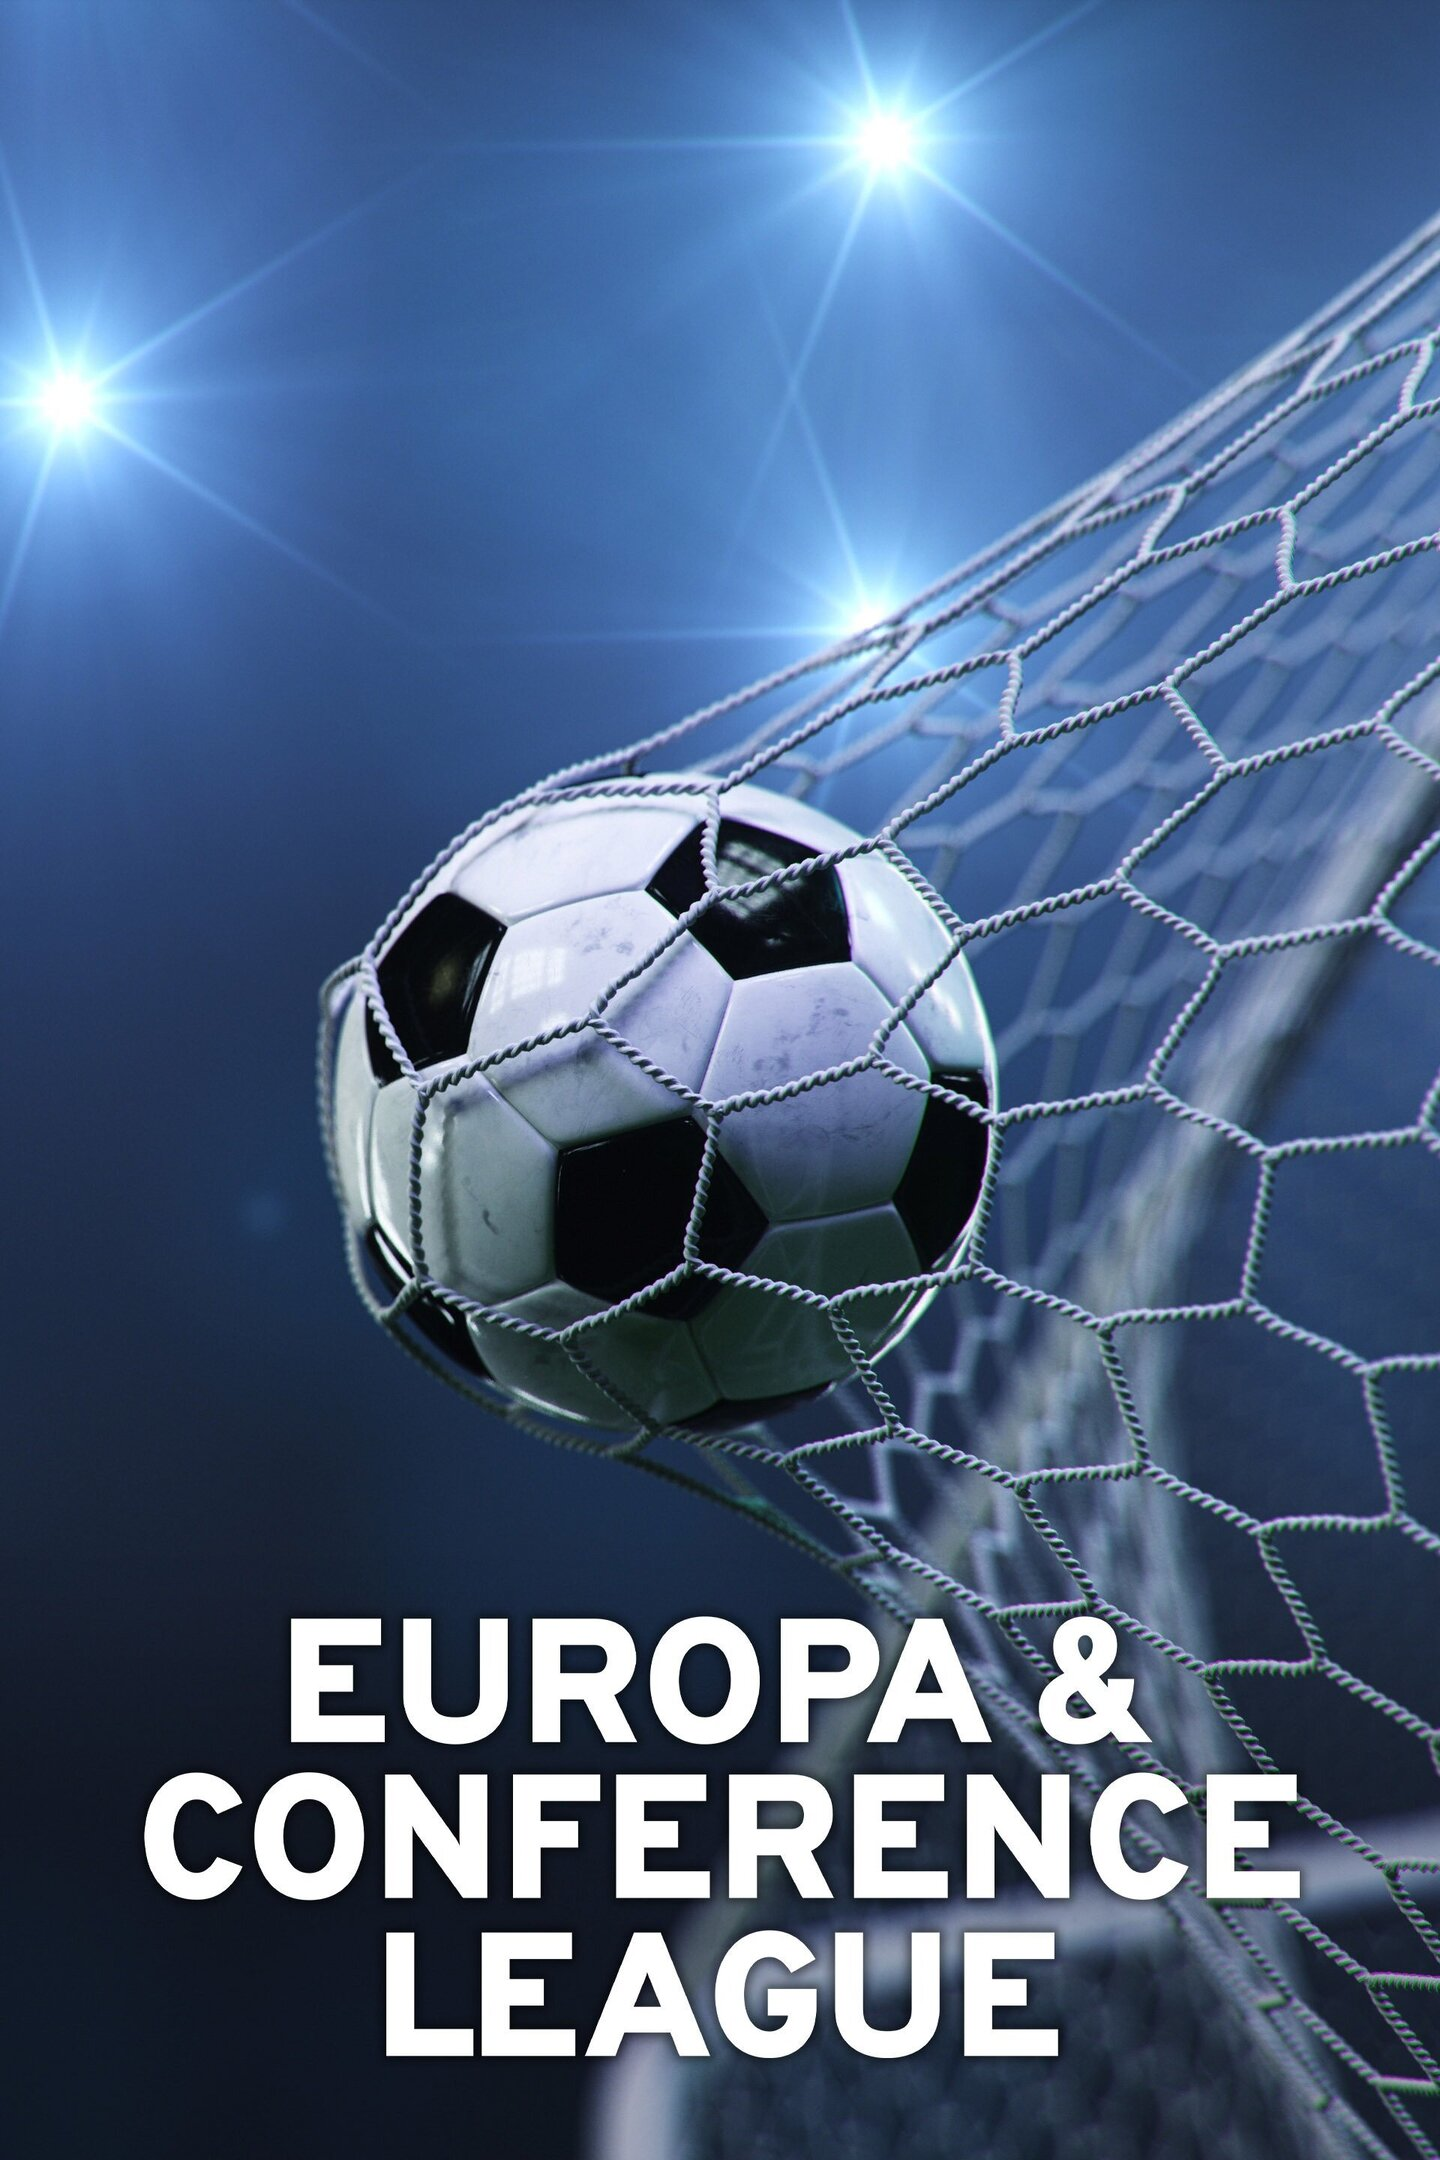 Europa & Conference League